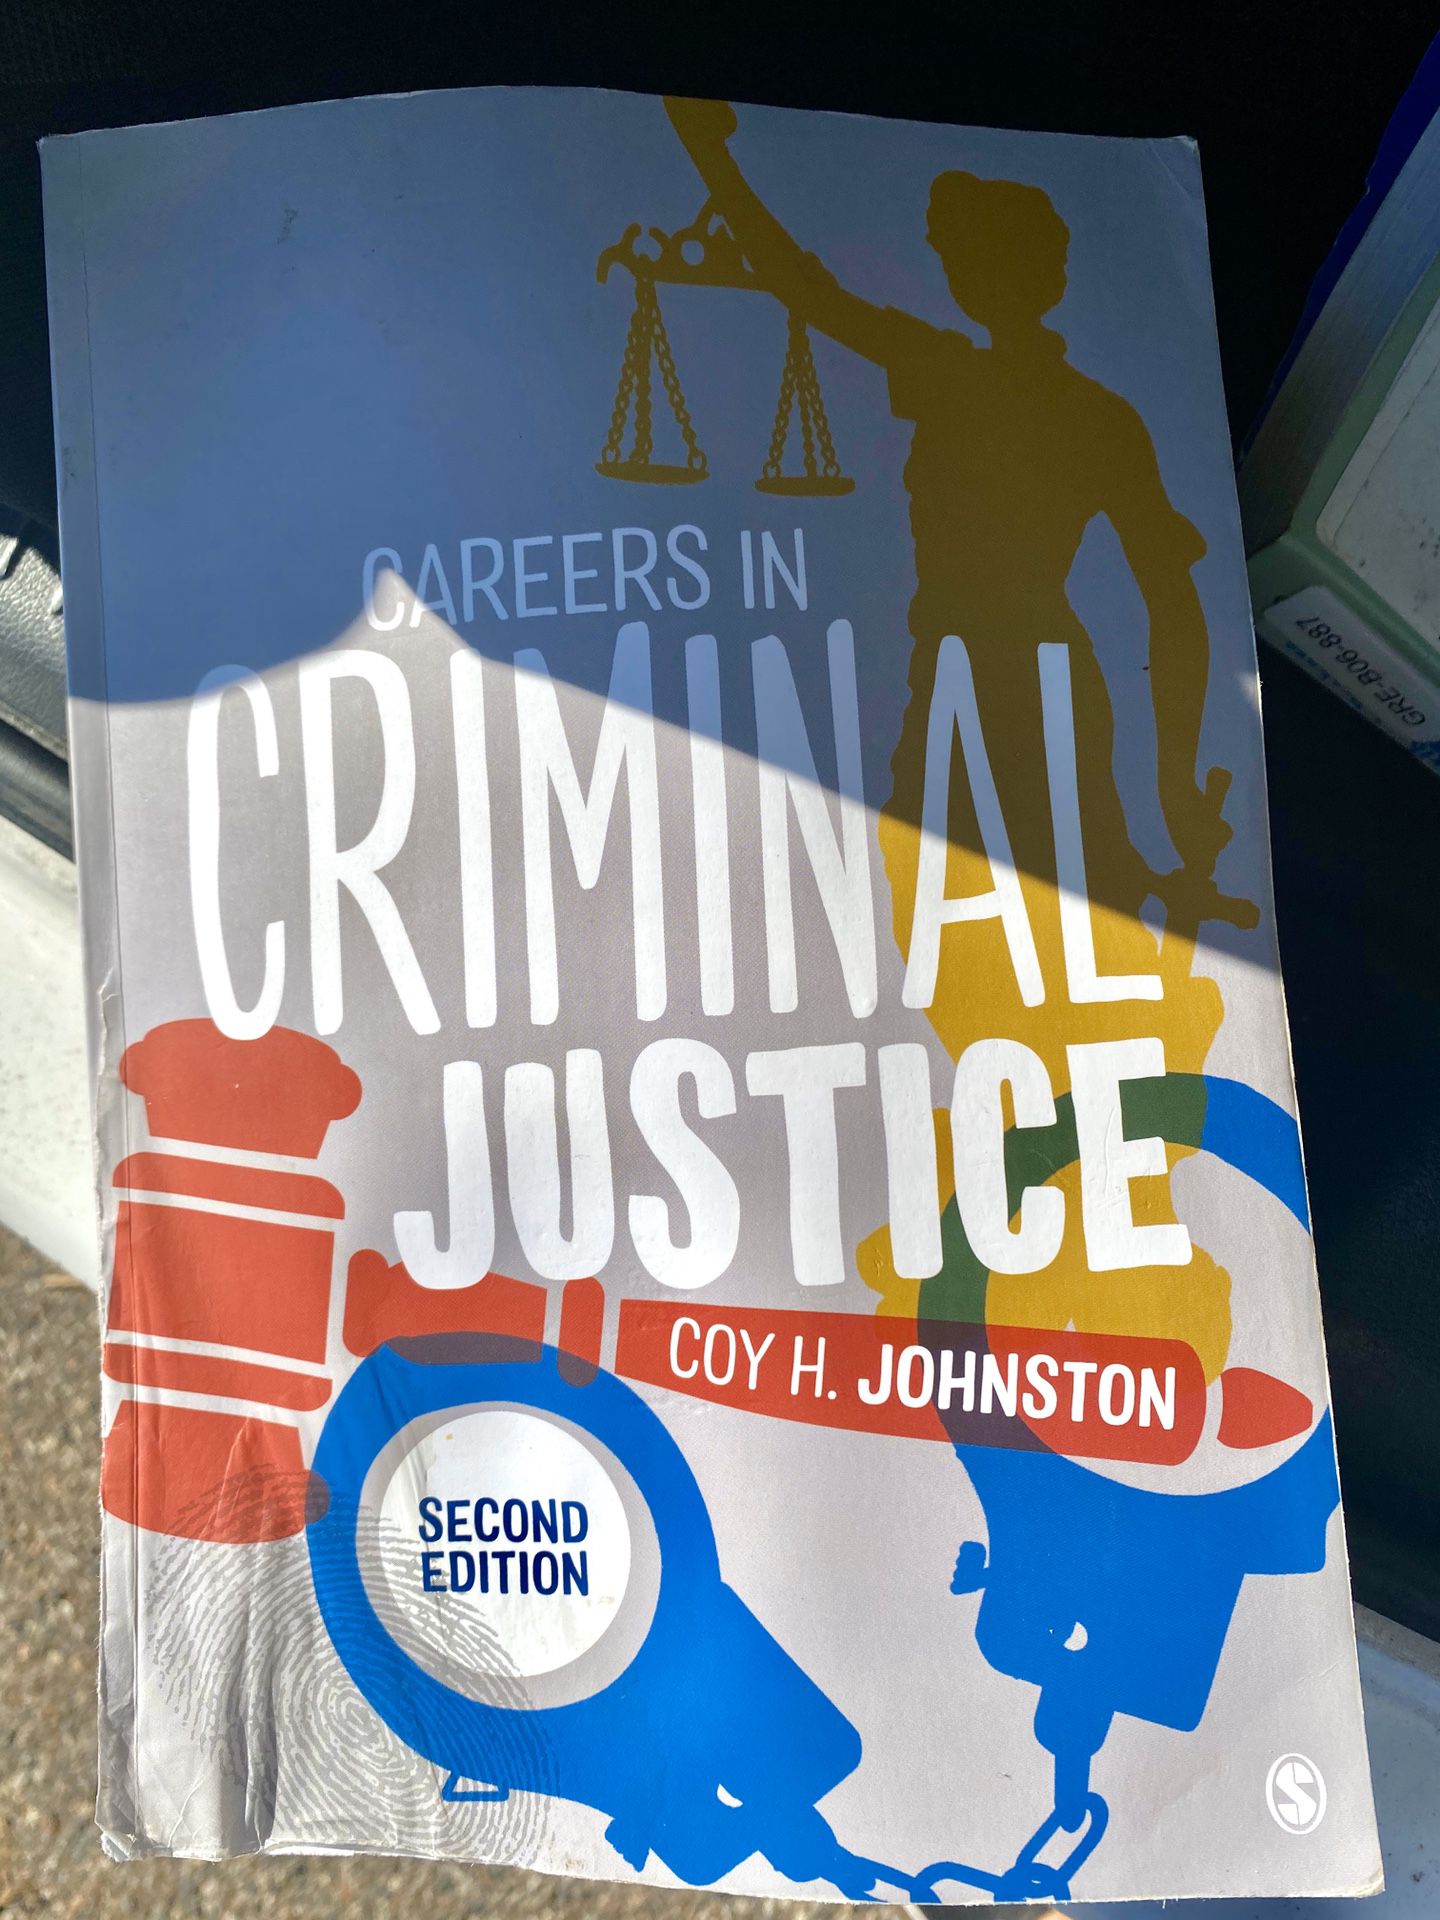 CAREERS IN CRIMINAL JUSTICE TEXTBOOK